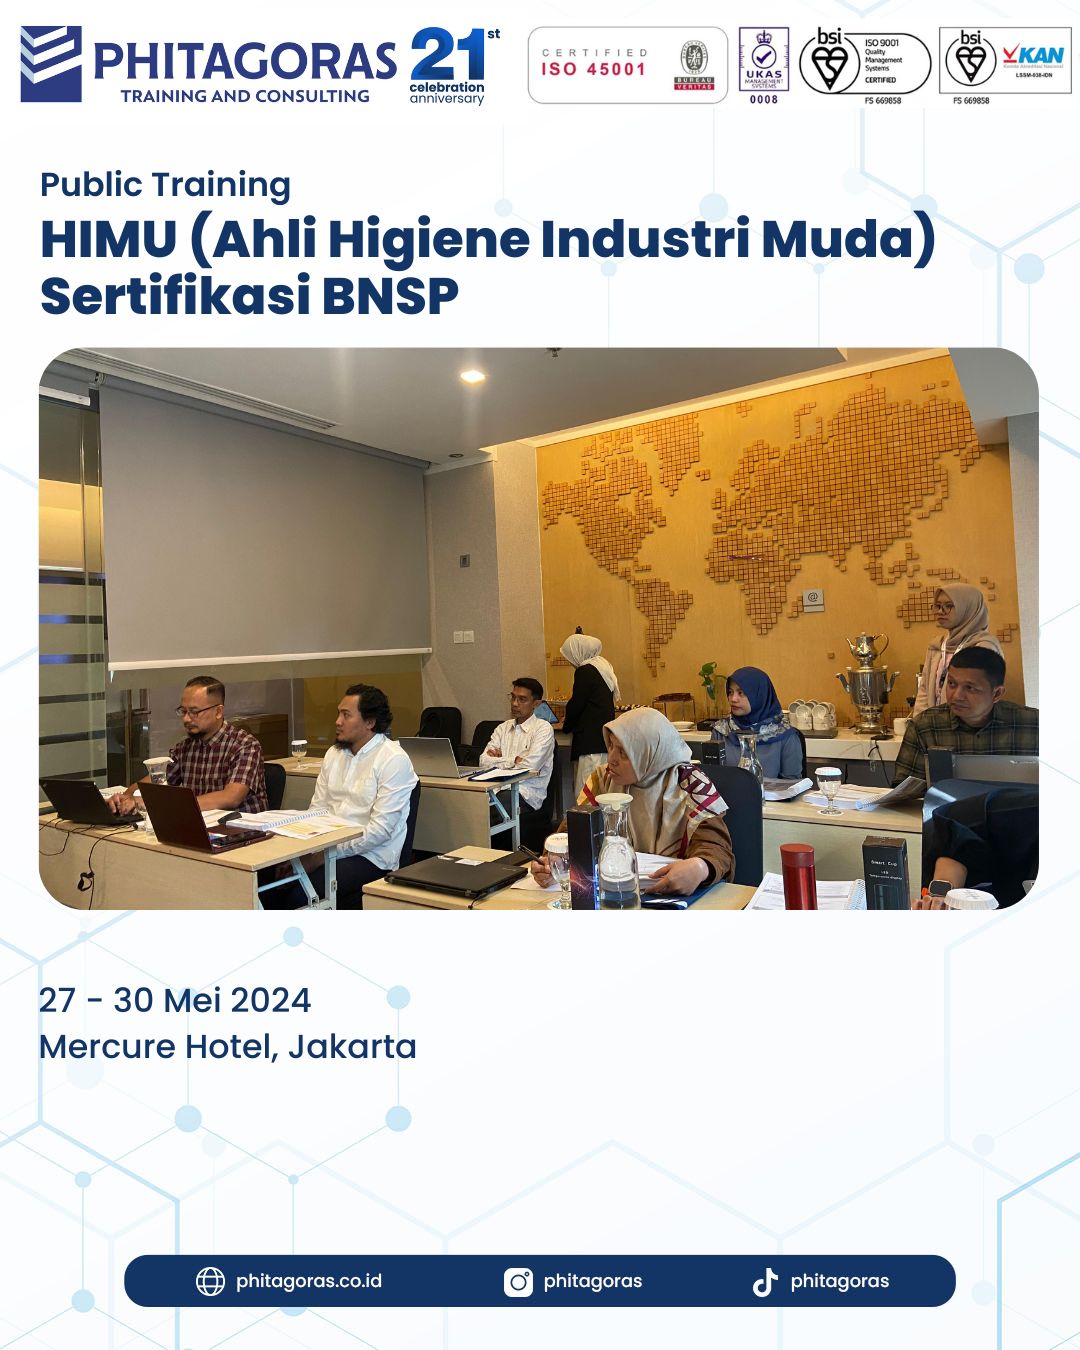 Public Offline - HIMU Sertifikasi BNSP (27 - 30 Mei 2024) at Mercure Hotel, Jakarta